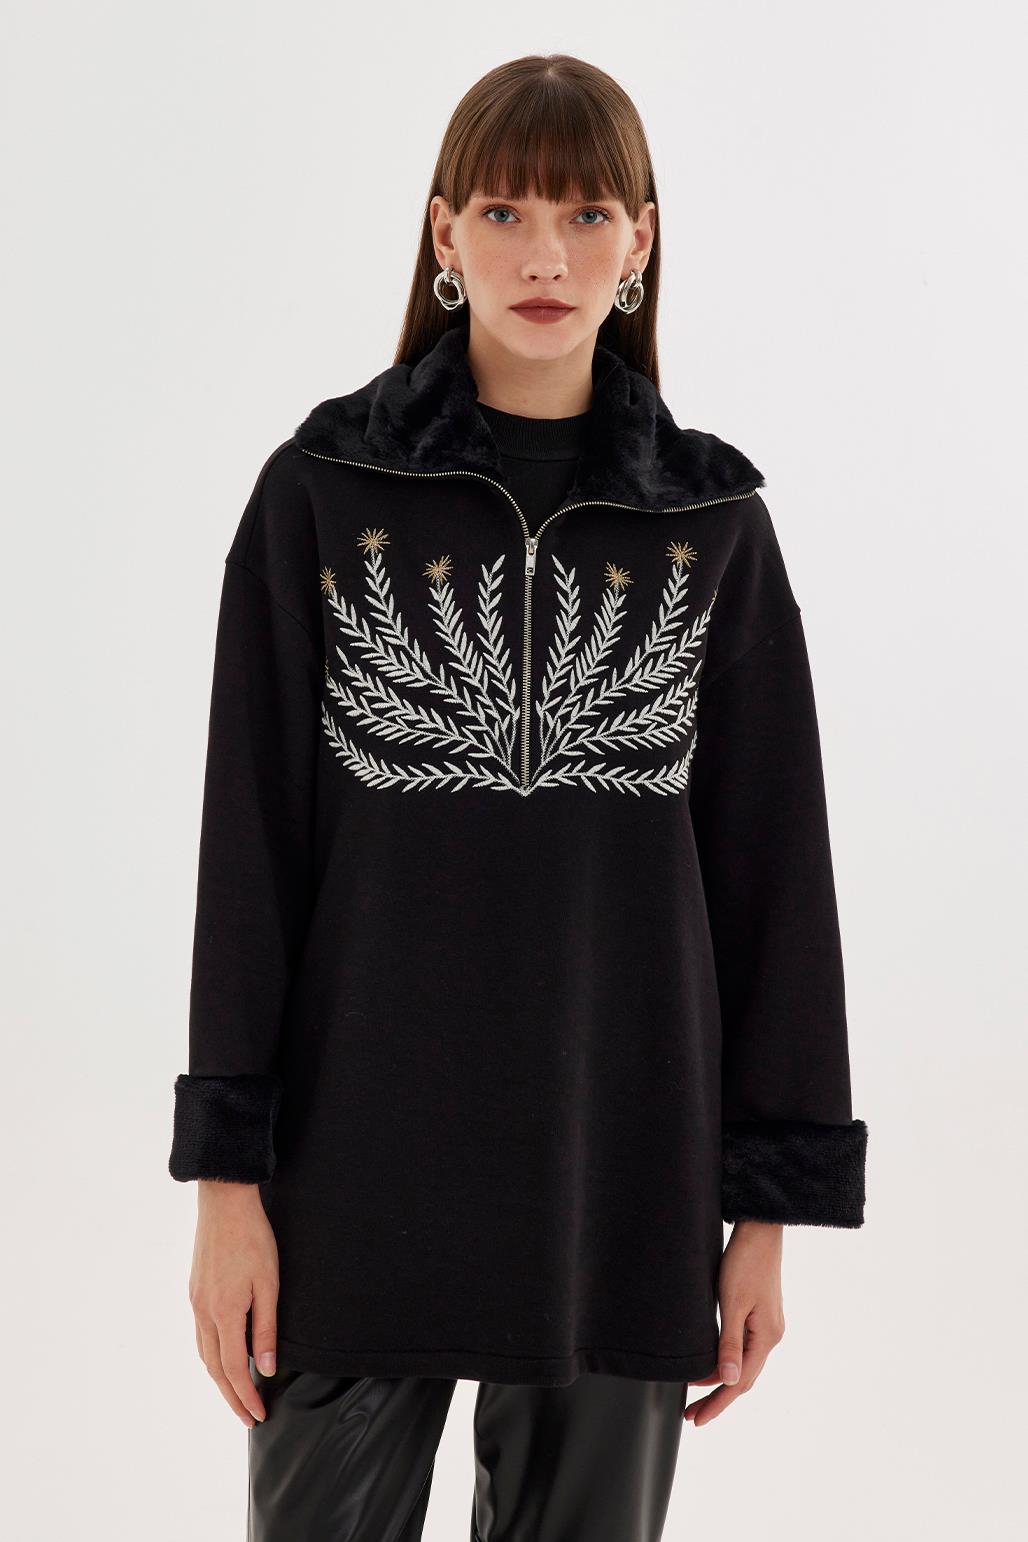 Embroidered Sweatshirt With Fur Black